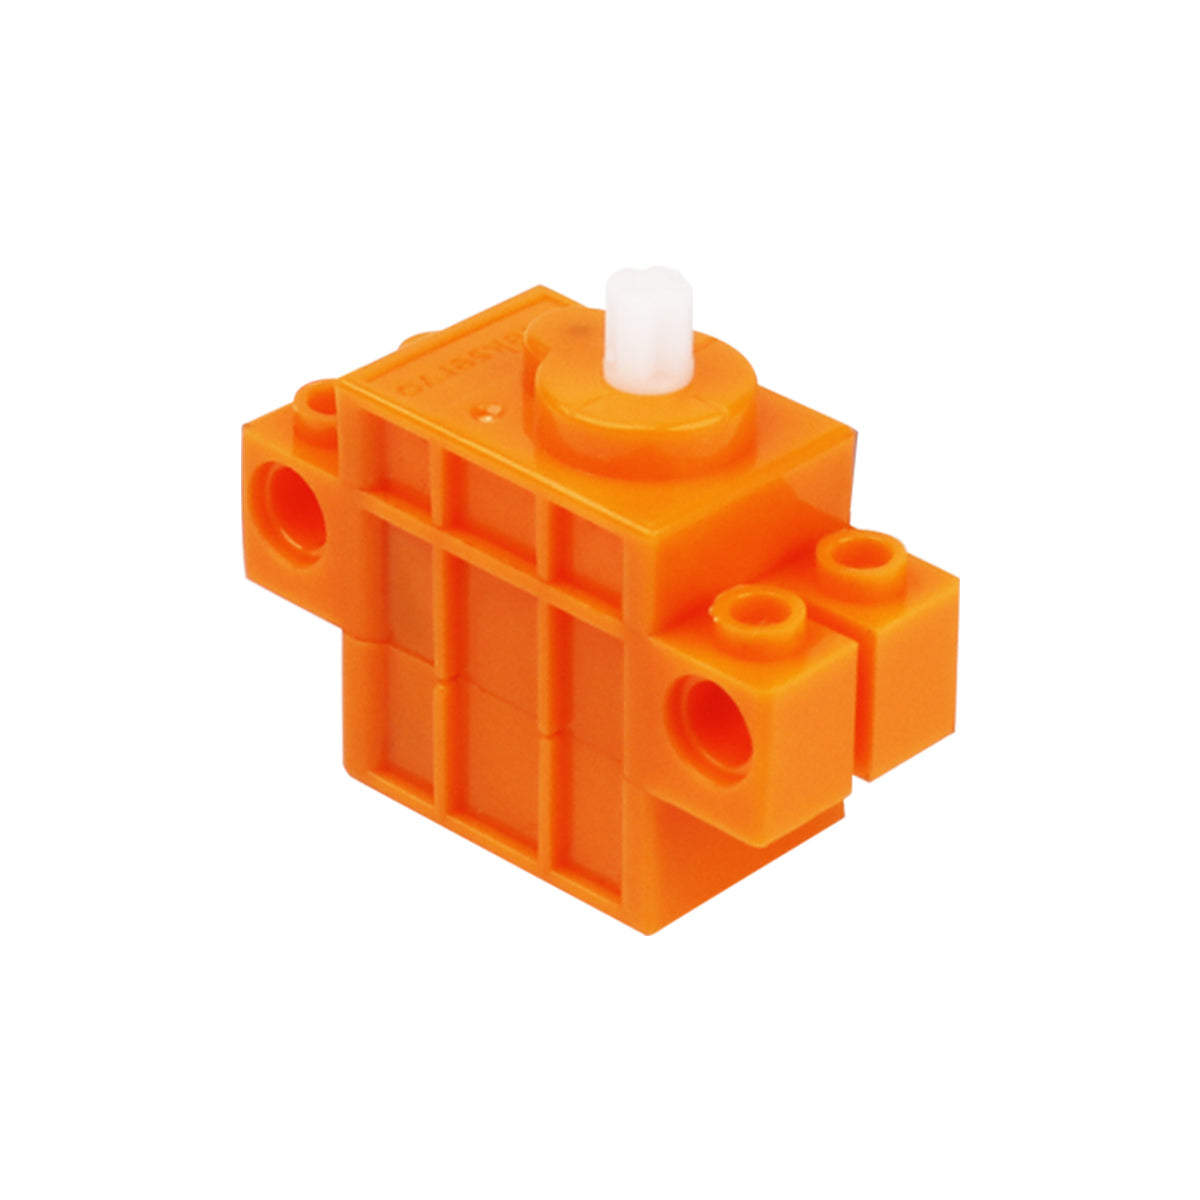 Hiwonder LEGO Block Servo 270°/ 360° micro:bit Program Control